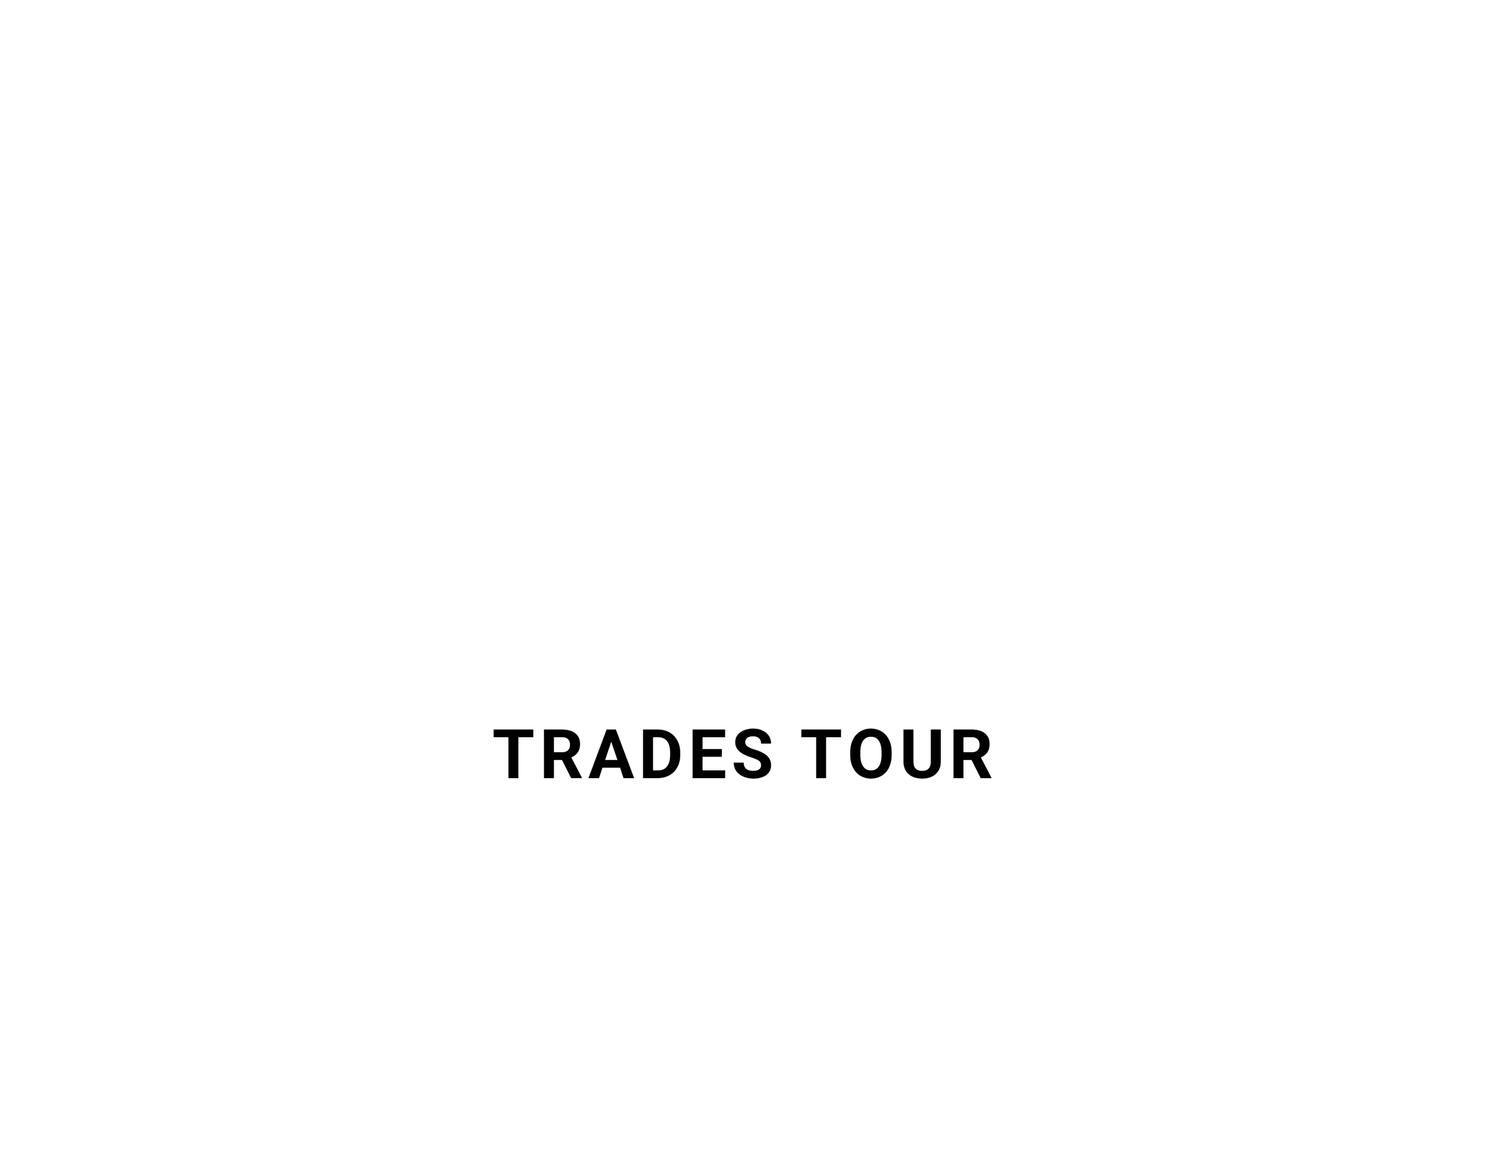 SoCAL TRADES TOUR